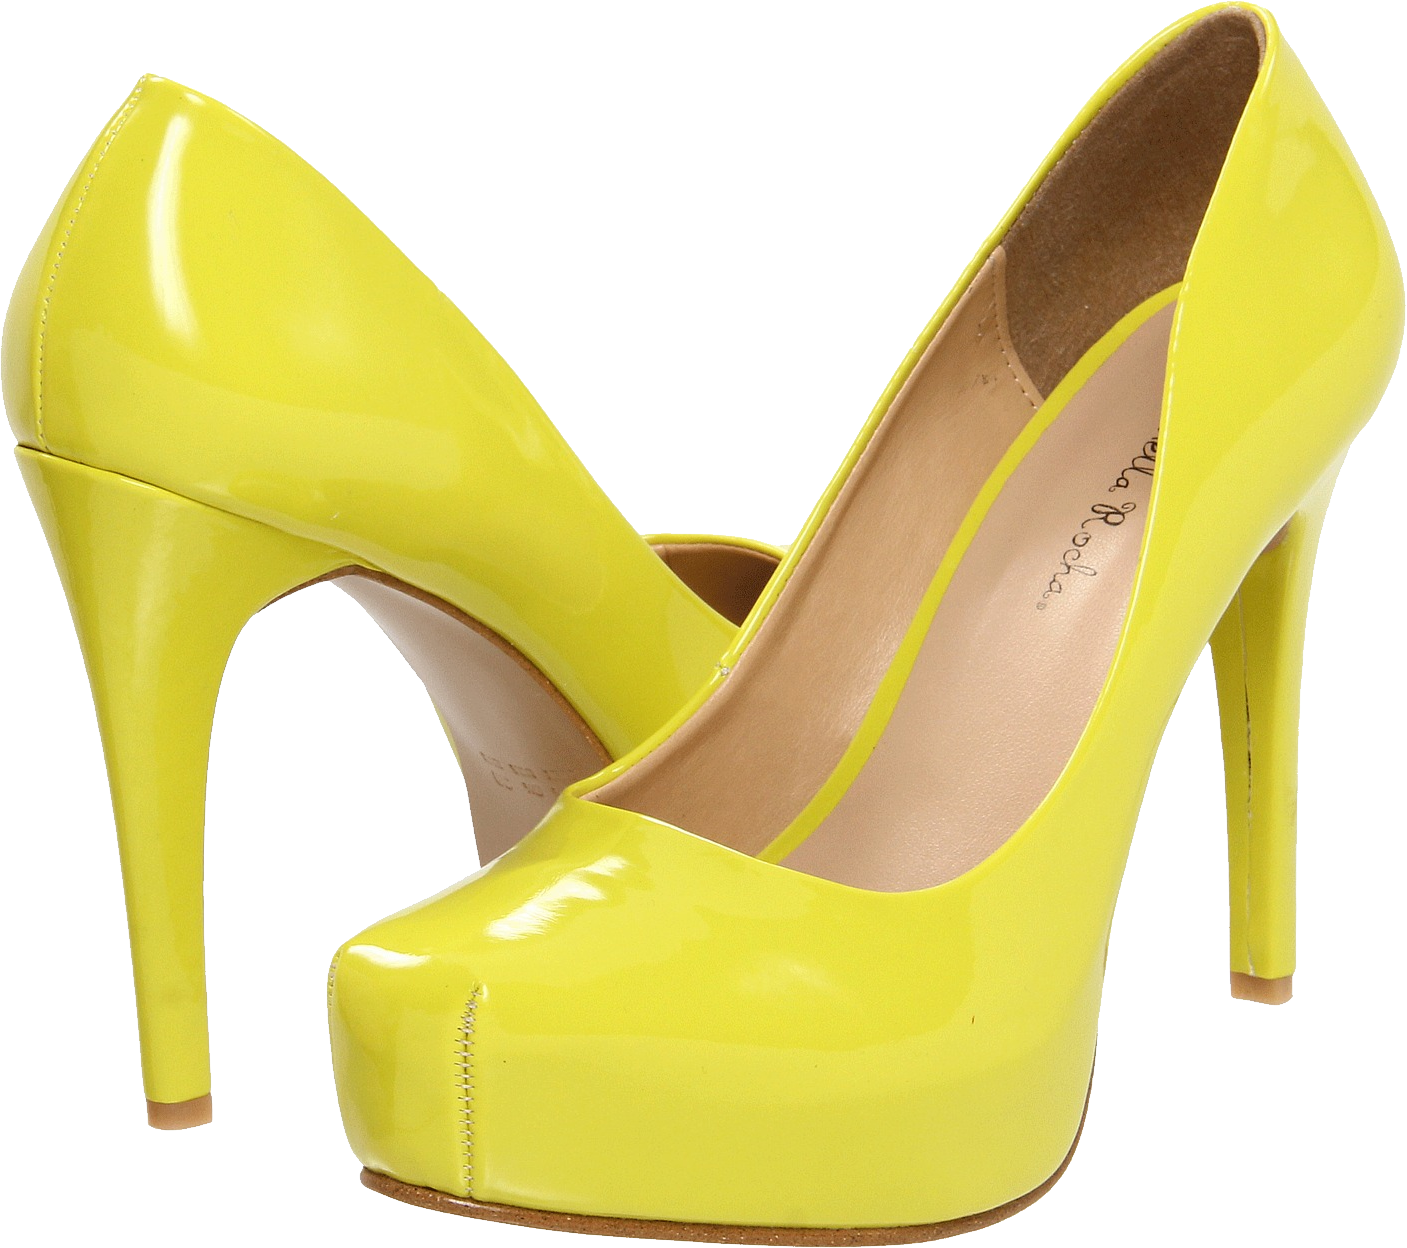 Sepatu wanita kuning